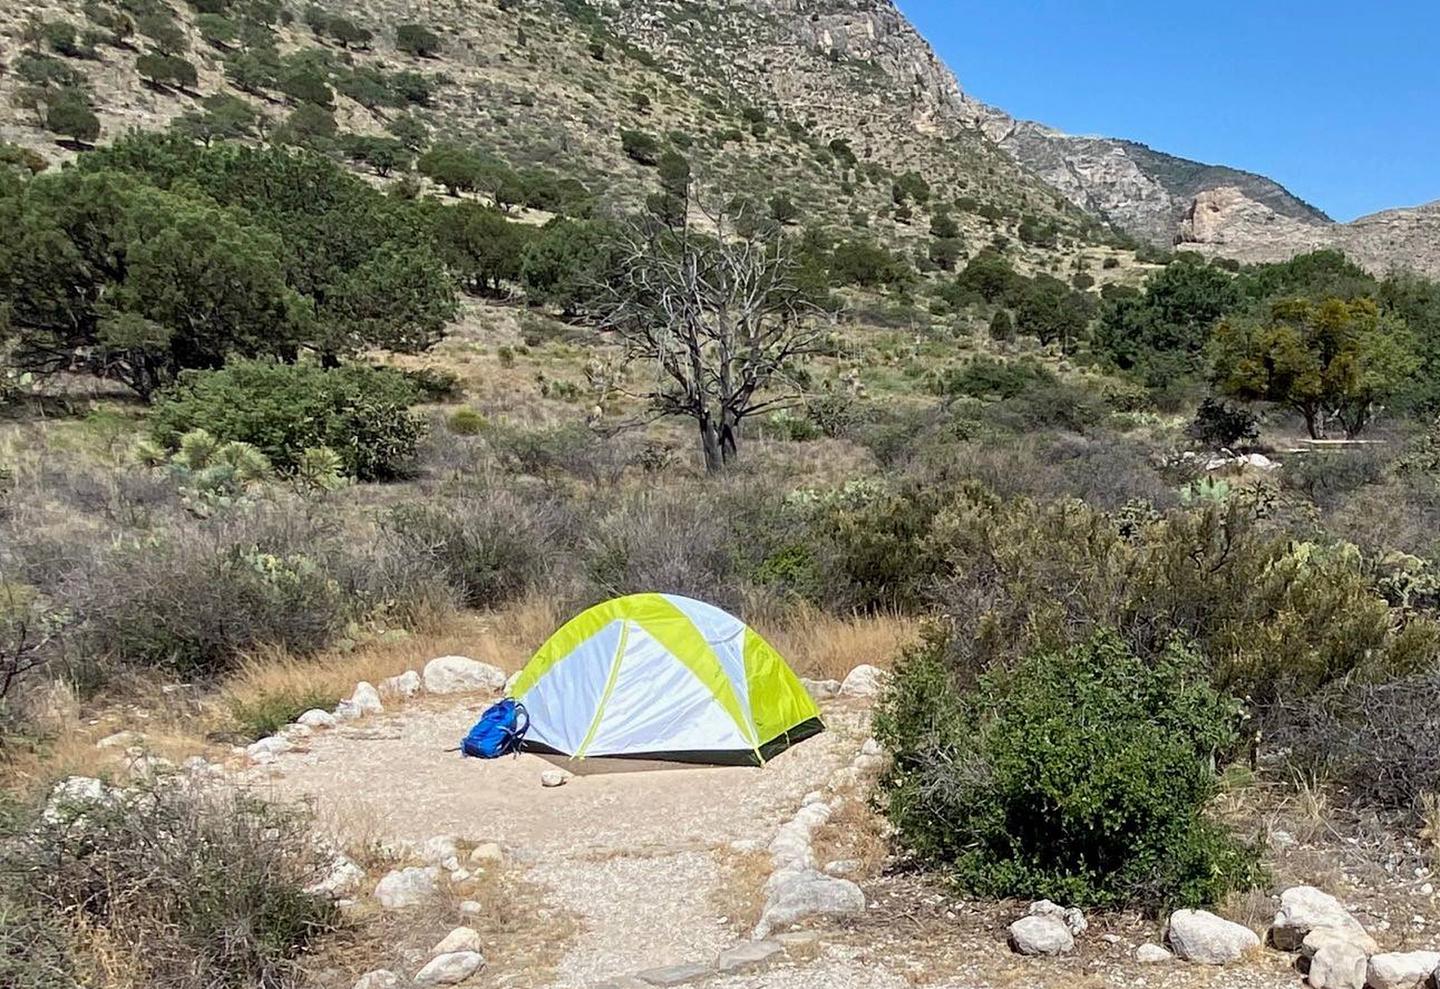 Tent campsite number 5 with desert vegetation surrounding tent pad.